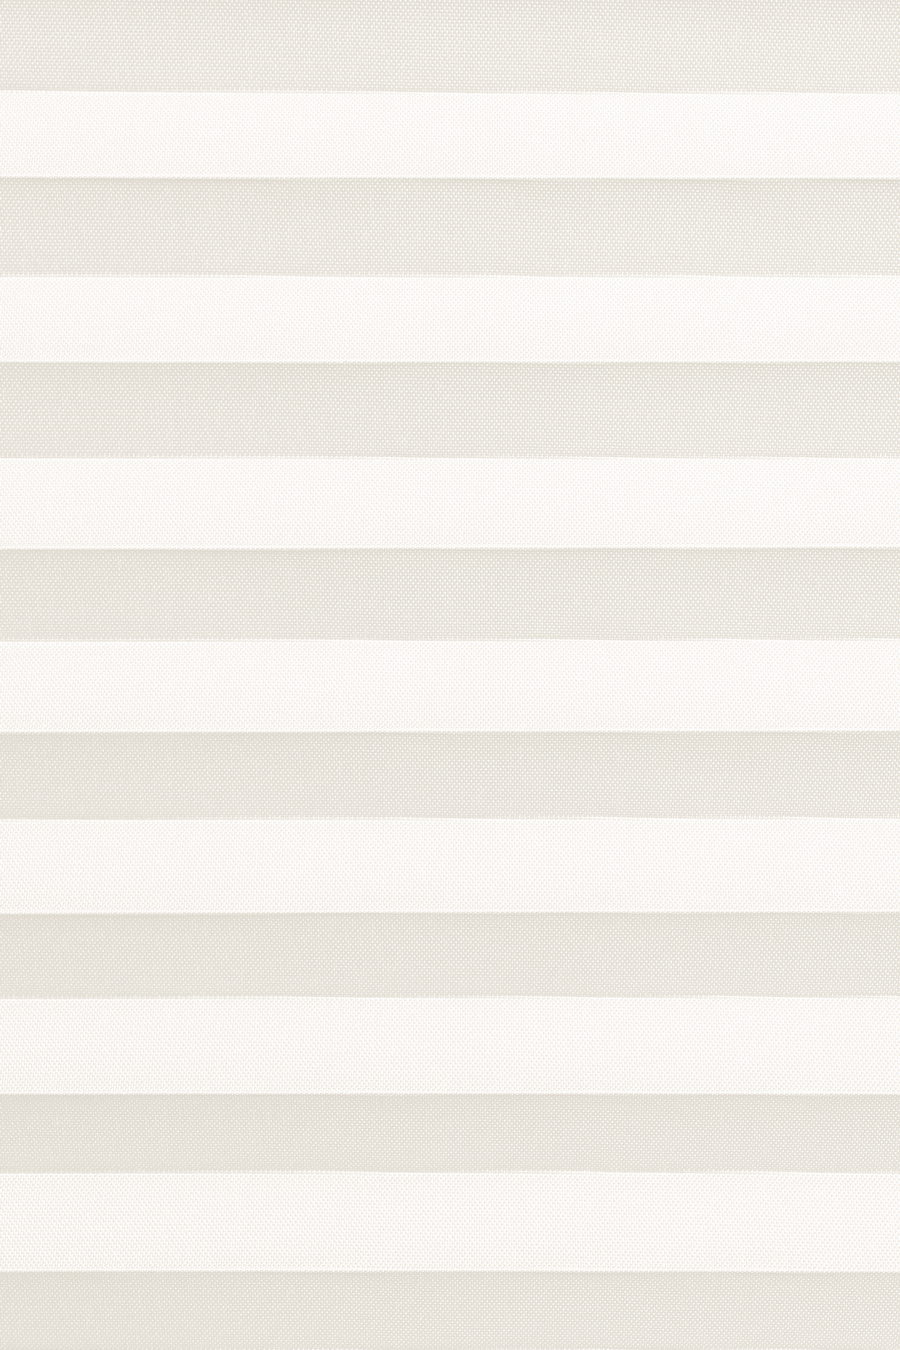 Ткань ALLEGRO PEARL ultra white 5702 для штор плиссе